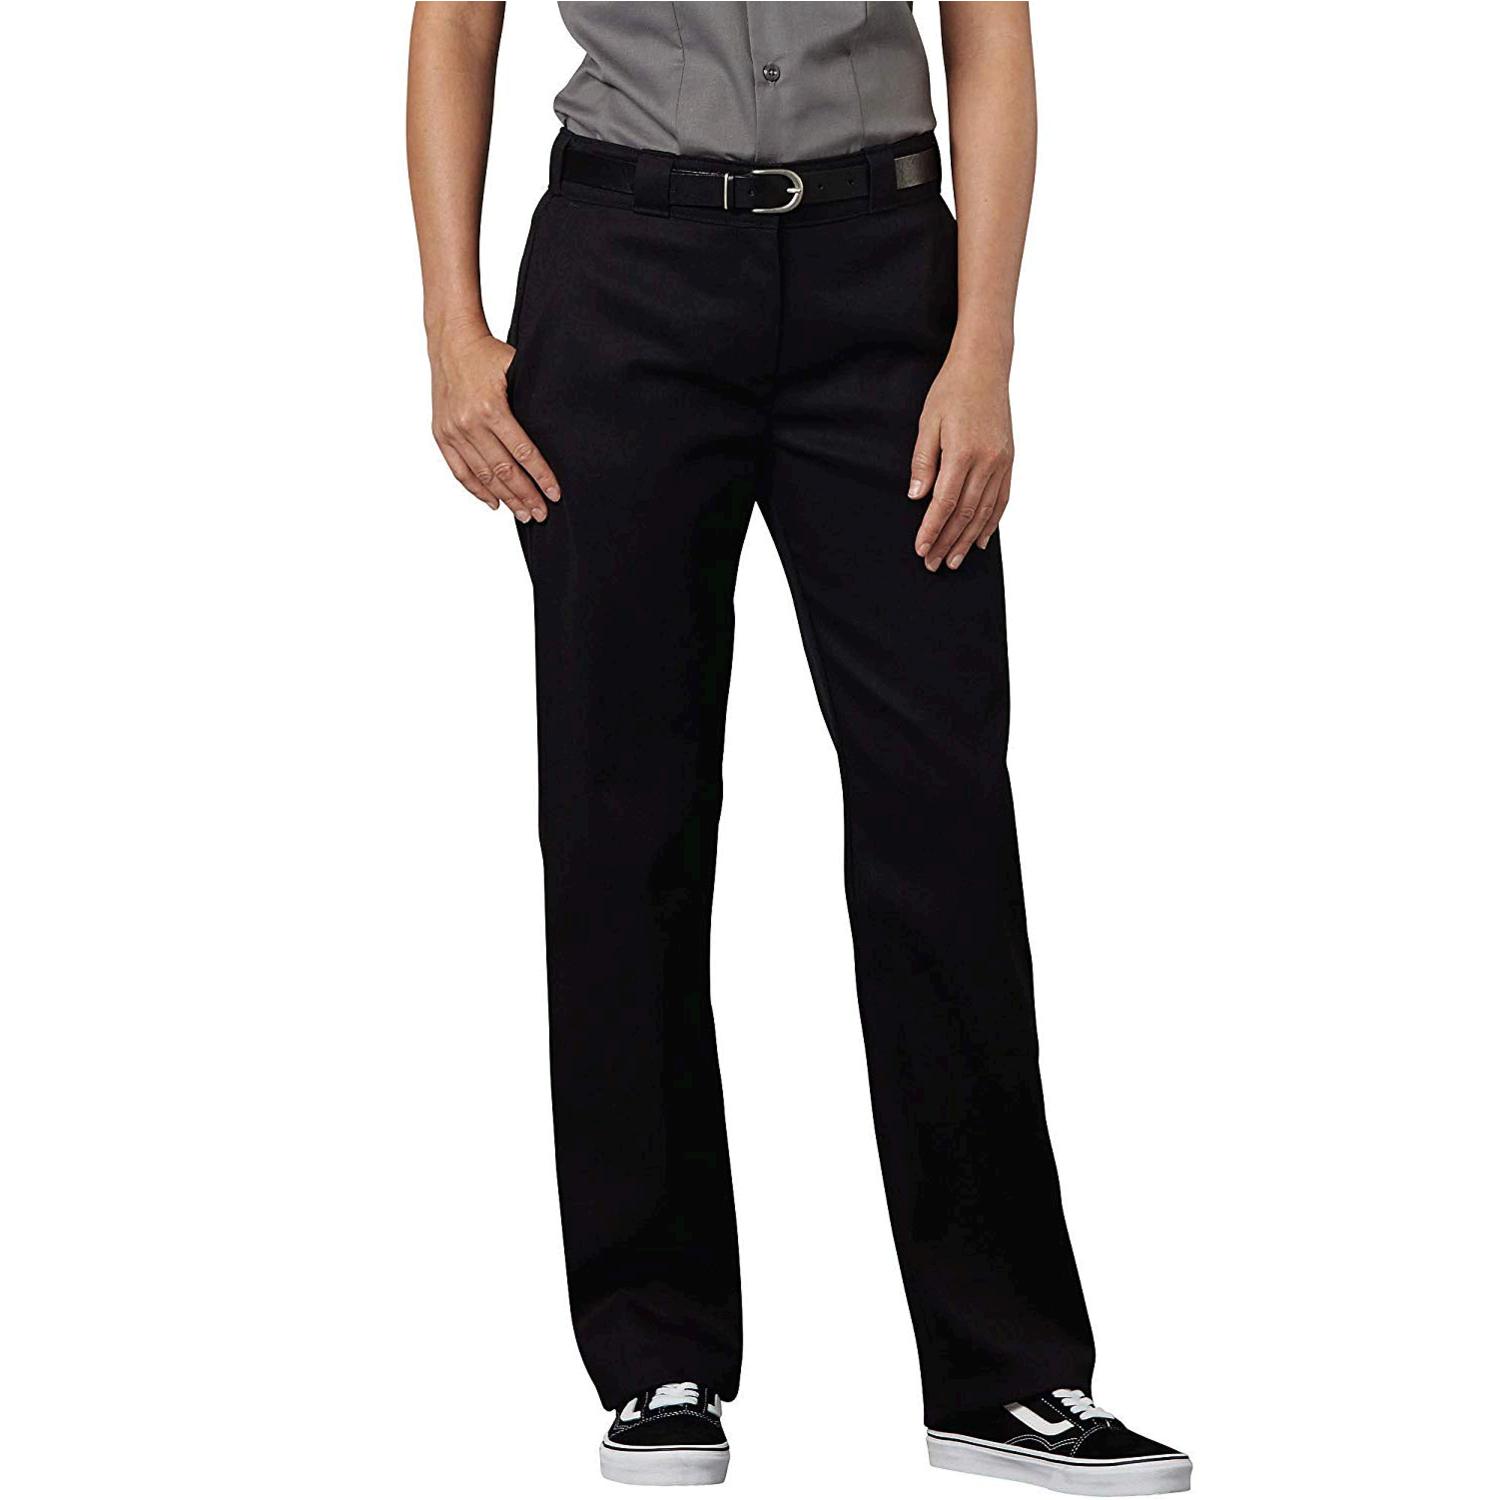 Dickies Women's Flex Original Fit Work Pants, Black, 16, Black, Size 16 ...